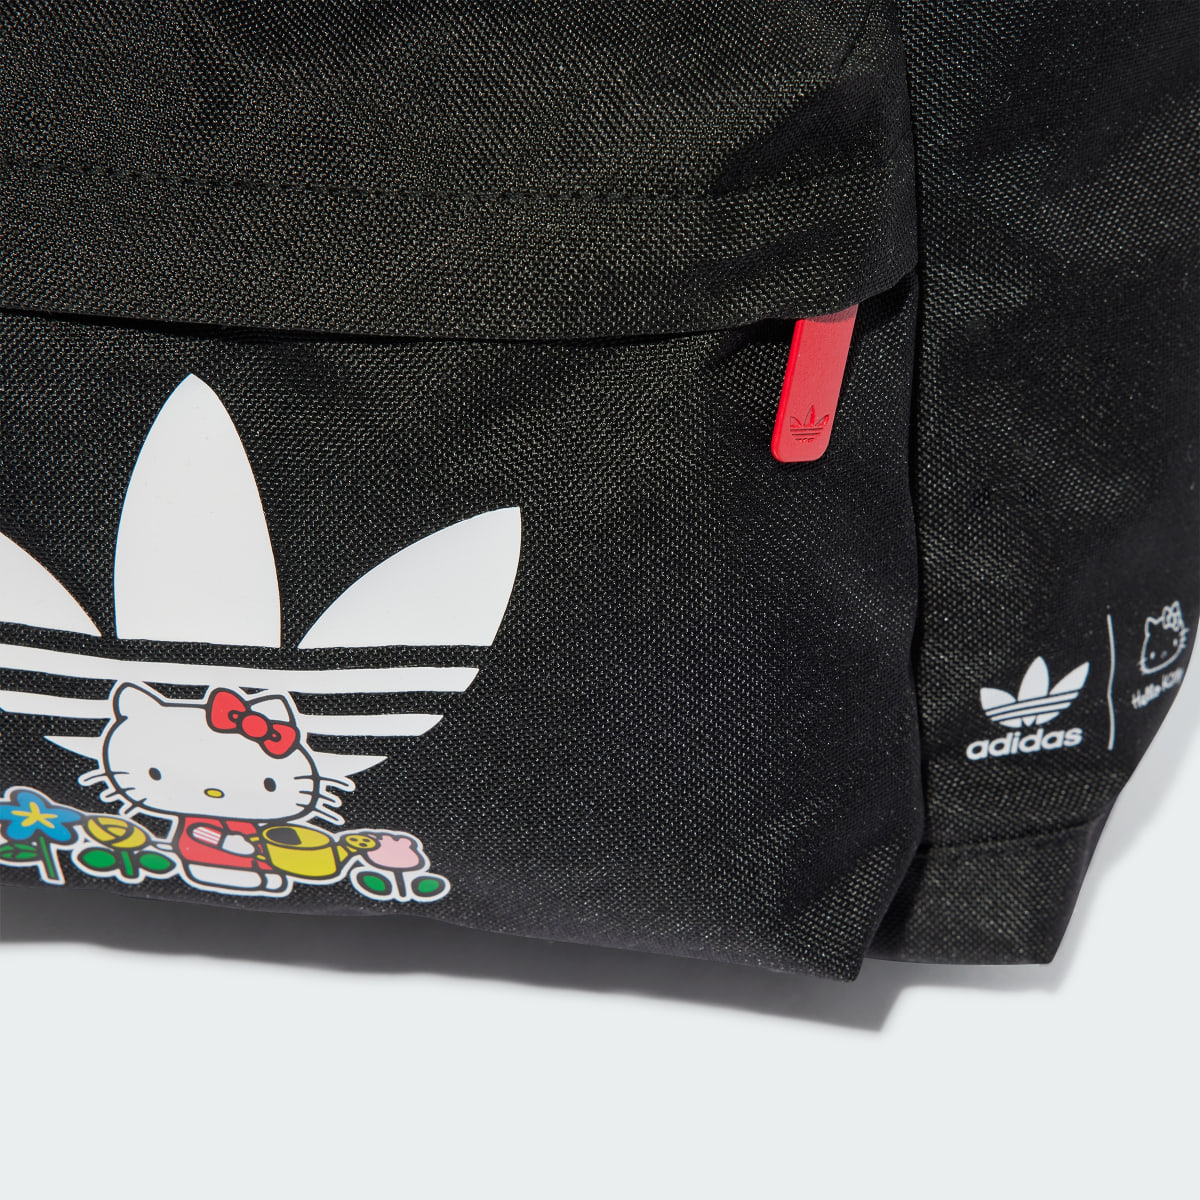 Adidas Mochila adidas x Hello Kitty Para Niños. 7